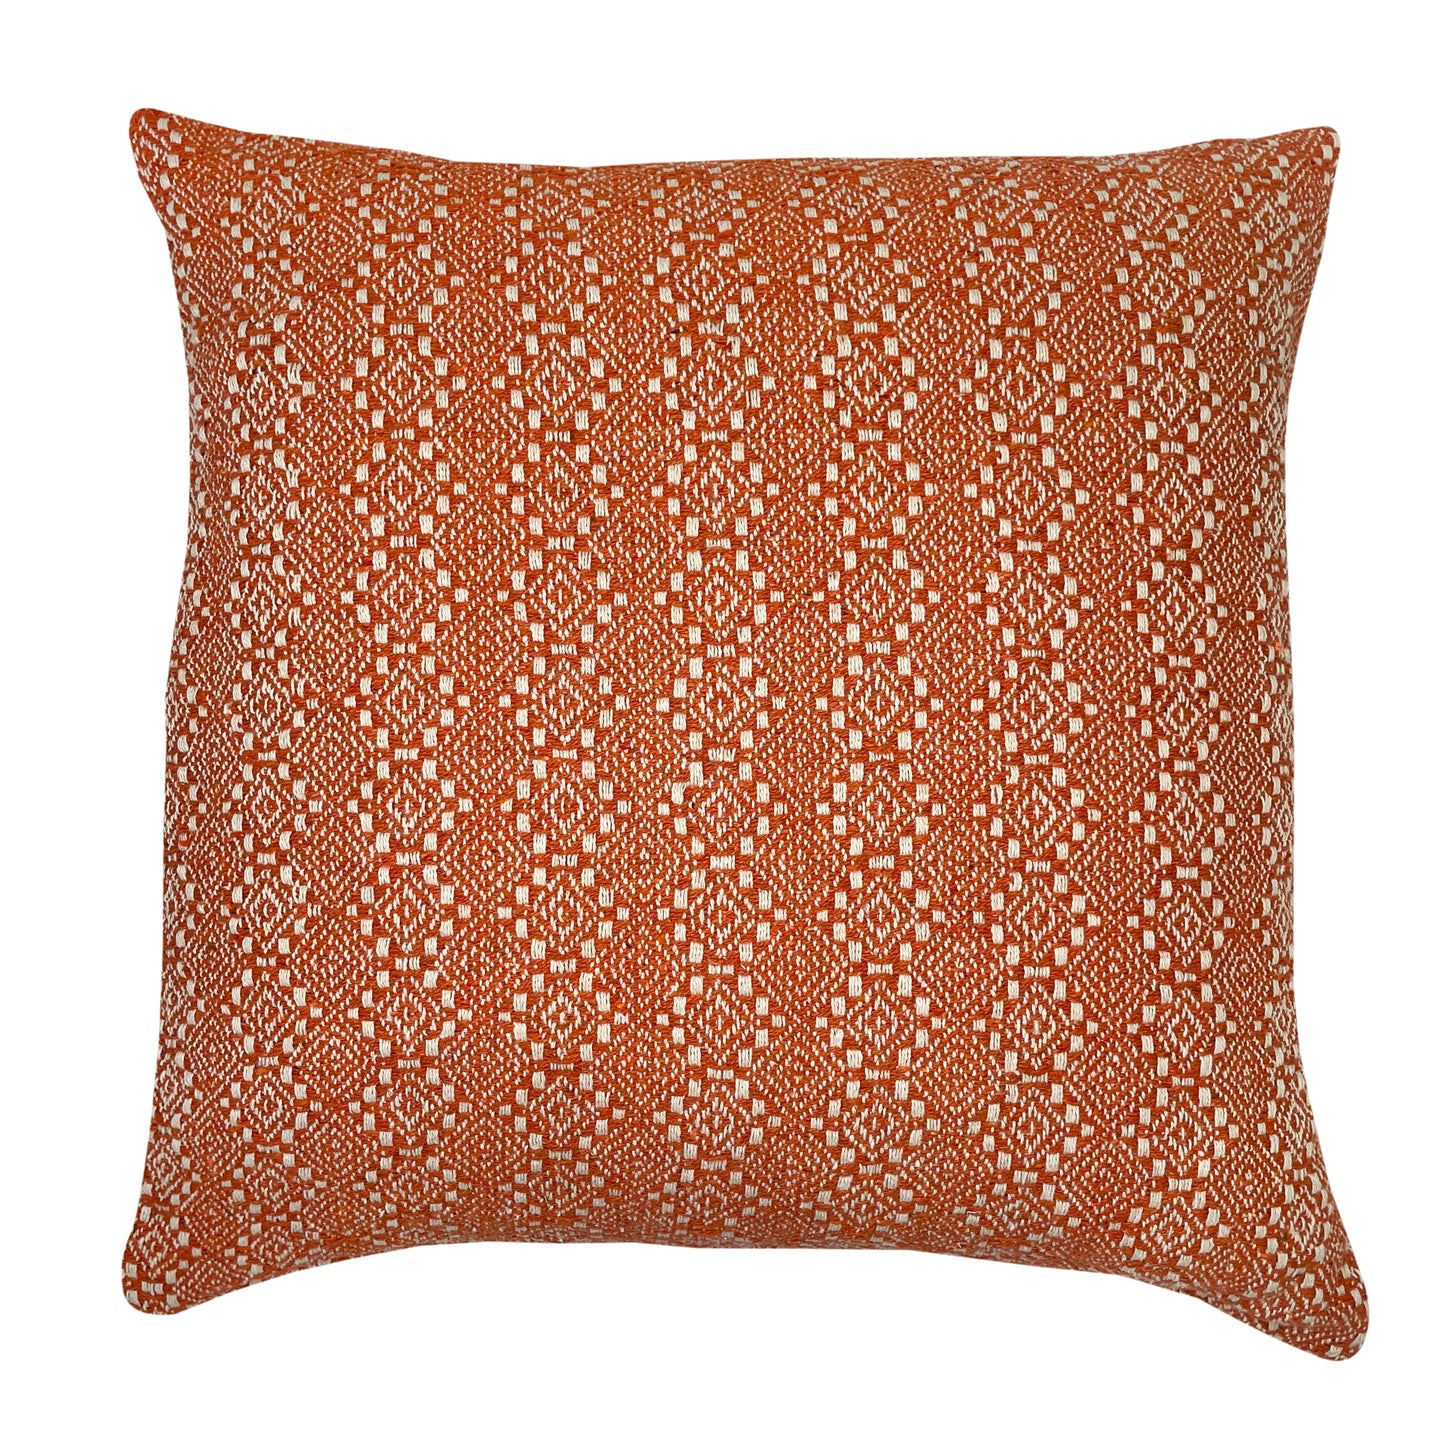 cotton textured woven cushion 45 x 45  rust

Size: 45 x 45 cm